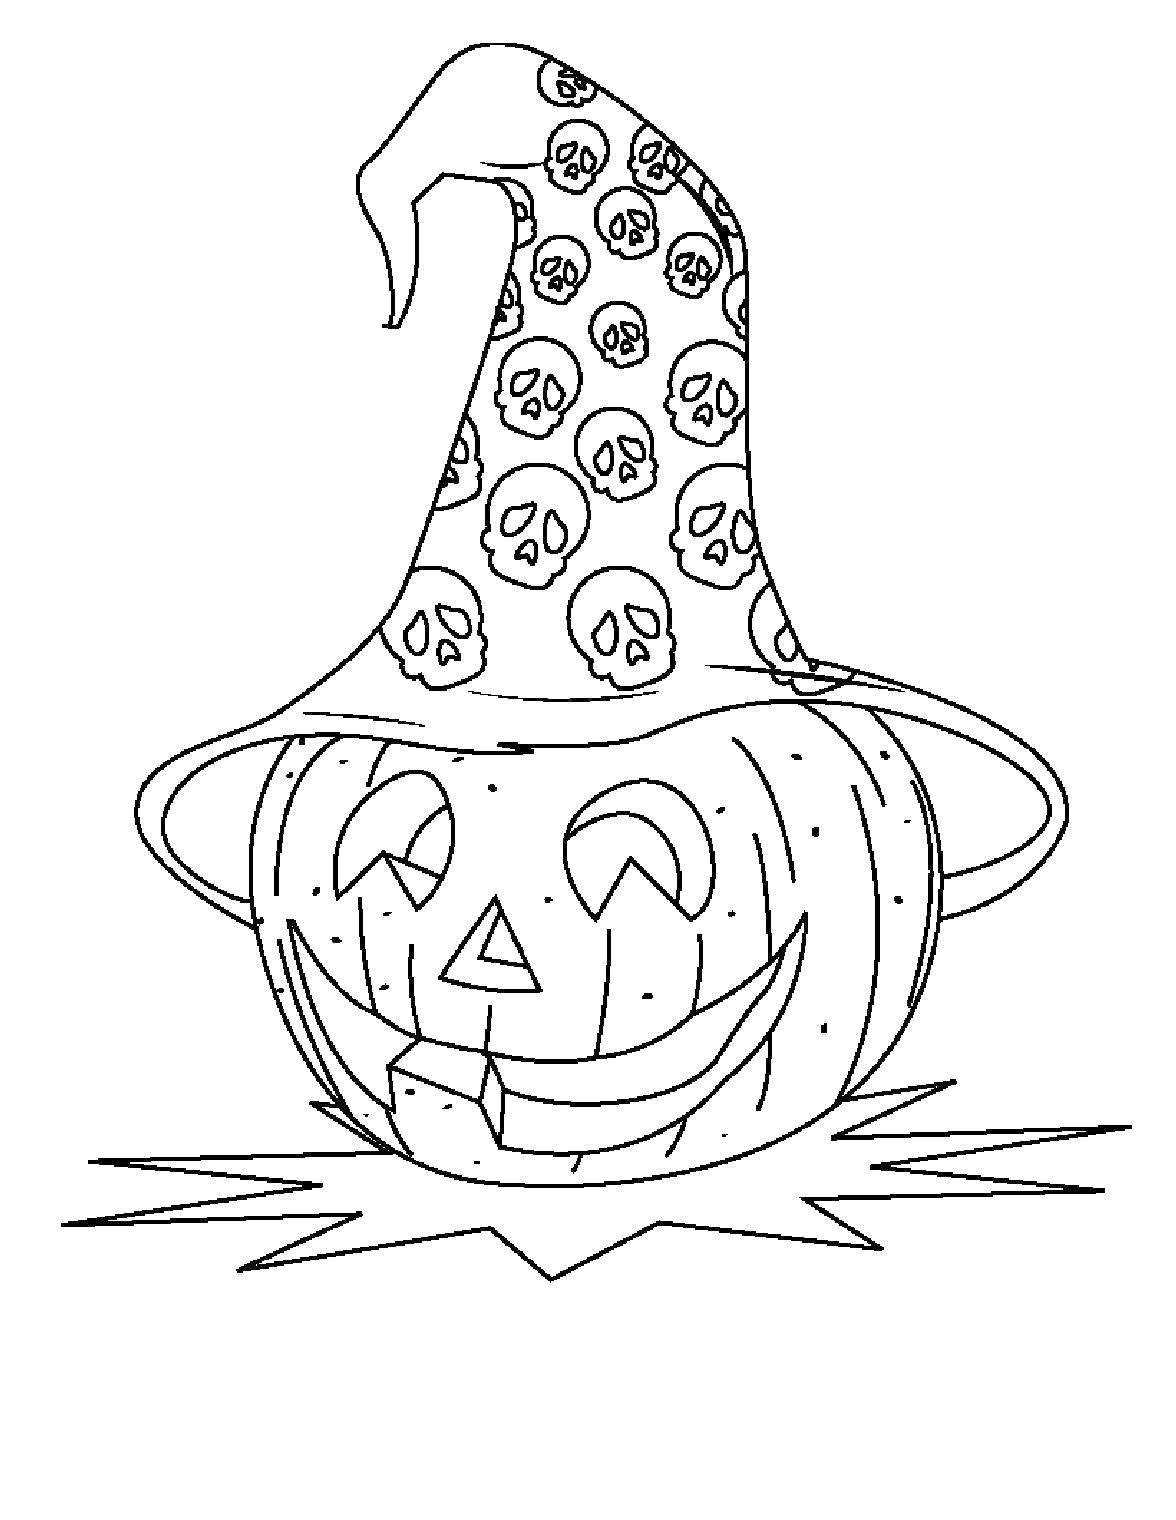 Coloring Pumpkin in witch hat. Category pumpkin Halloween. Tags:  Halloween, pumpkin.